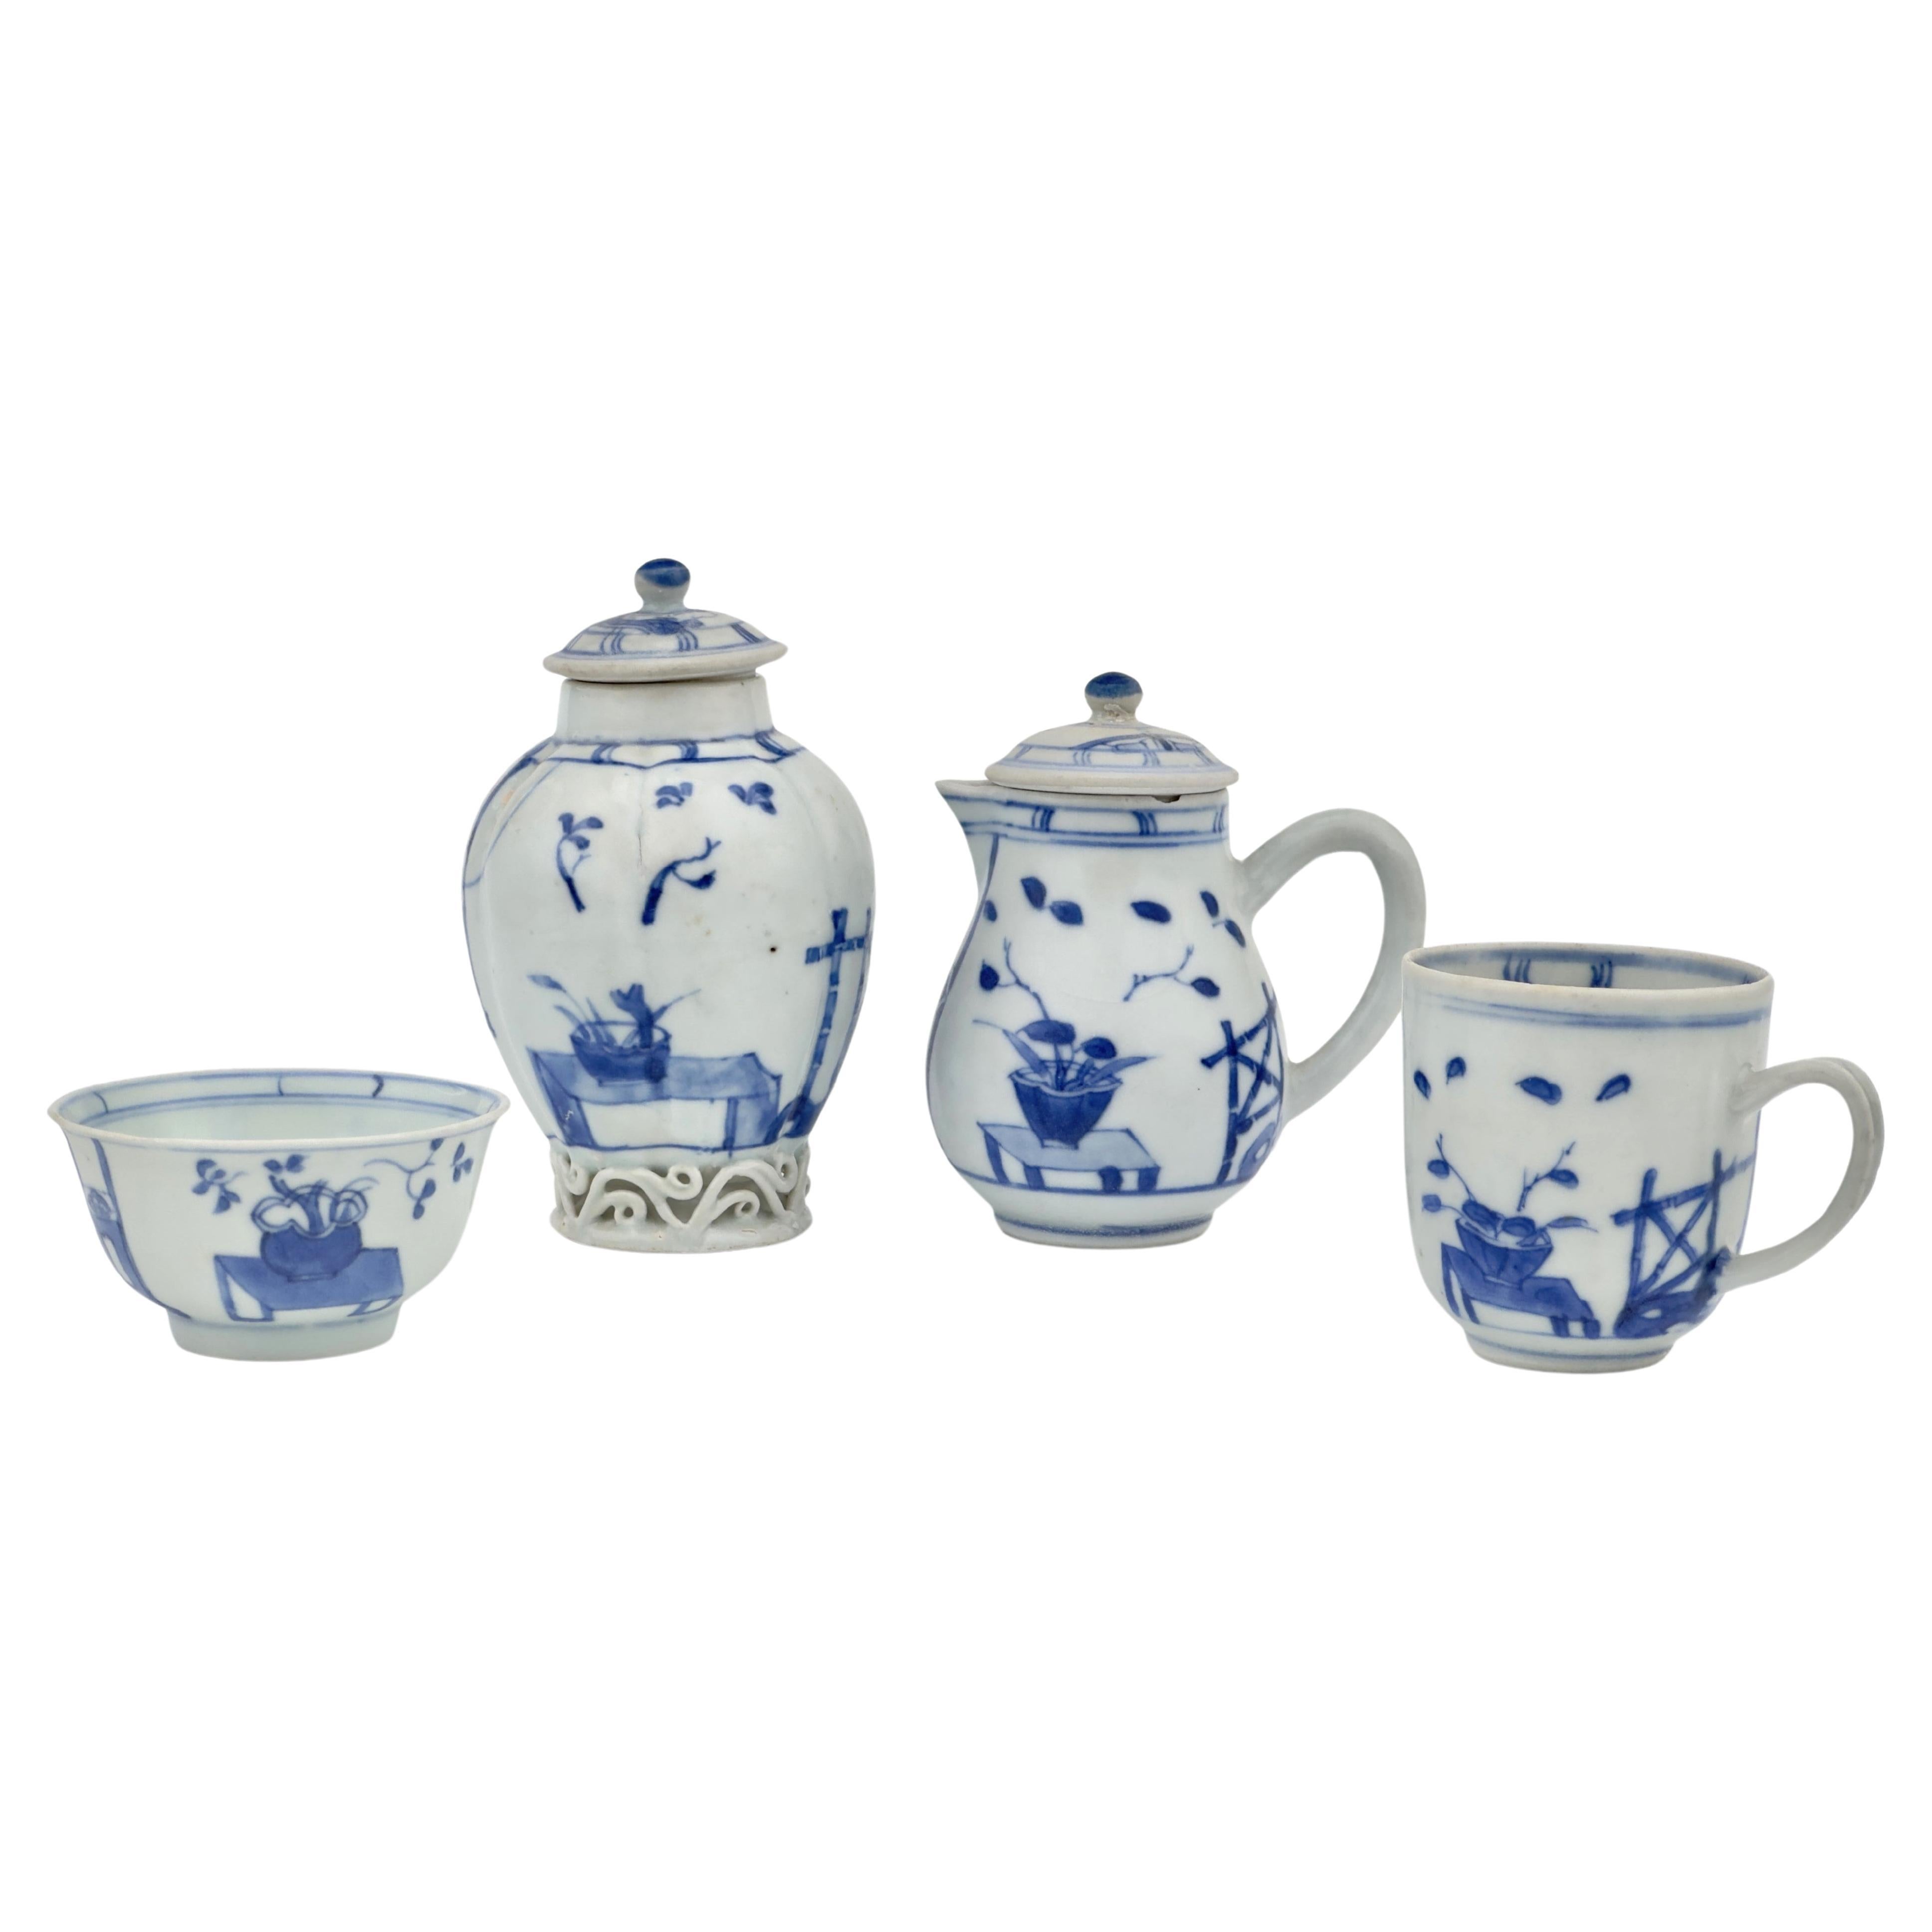 Blaues und weißes Teeservice mit Imari-Pavillon-Muster, ca. 1725, Qing Dynasty, Yongzheng Re im Angebot